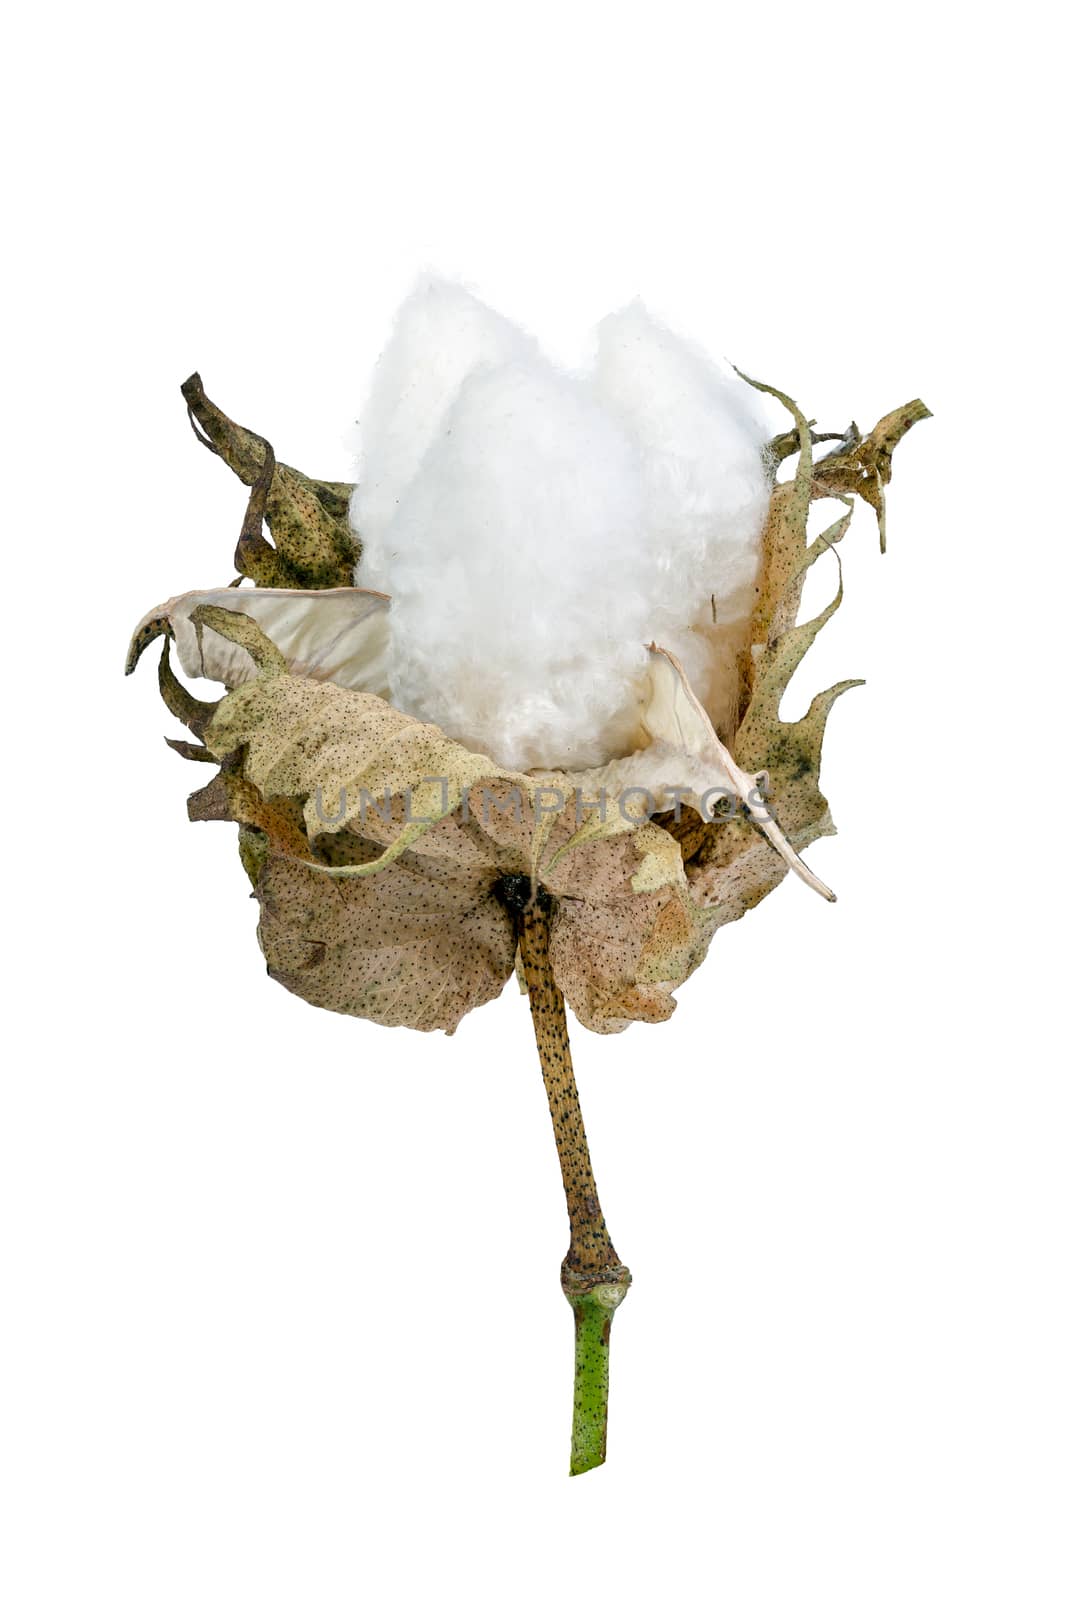 cotton - Gossypium hirsutum L. isolated on white background